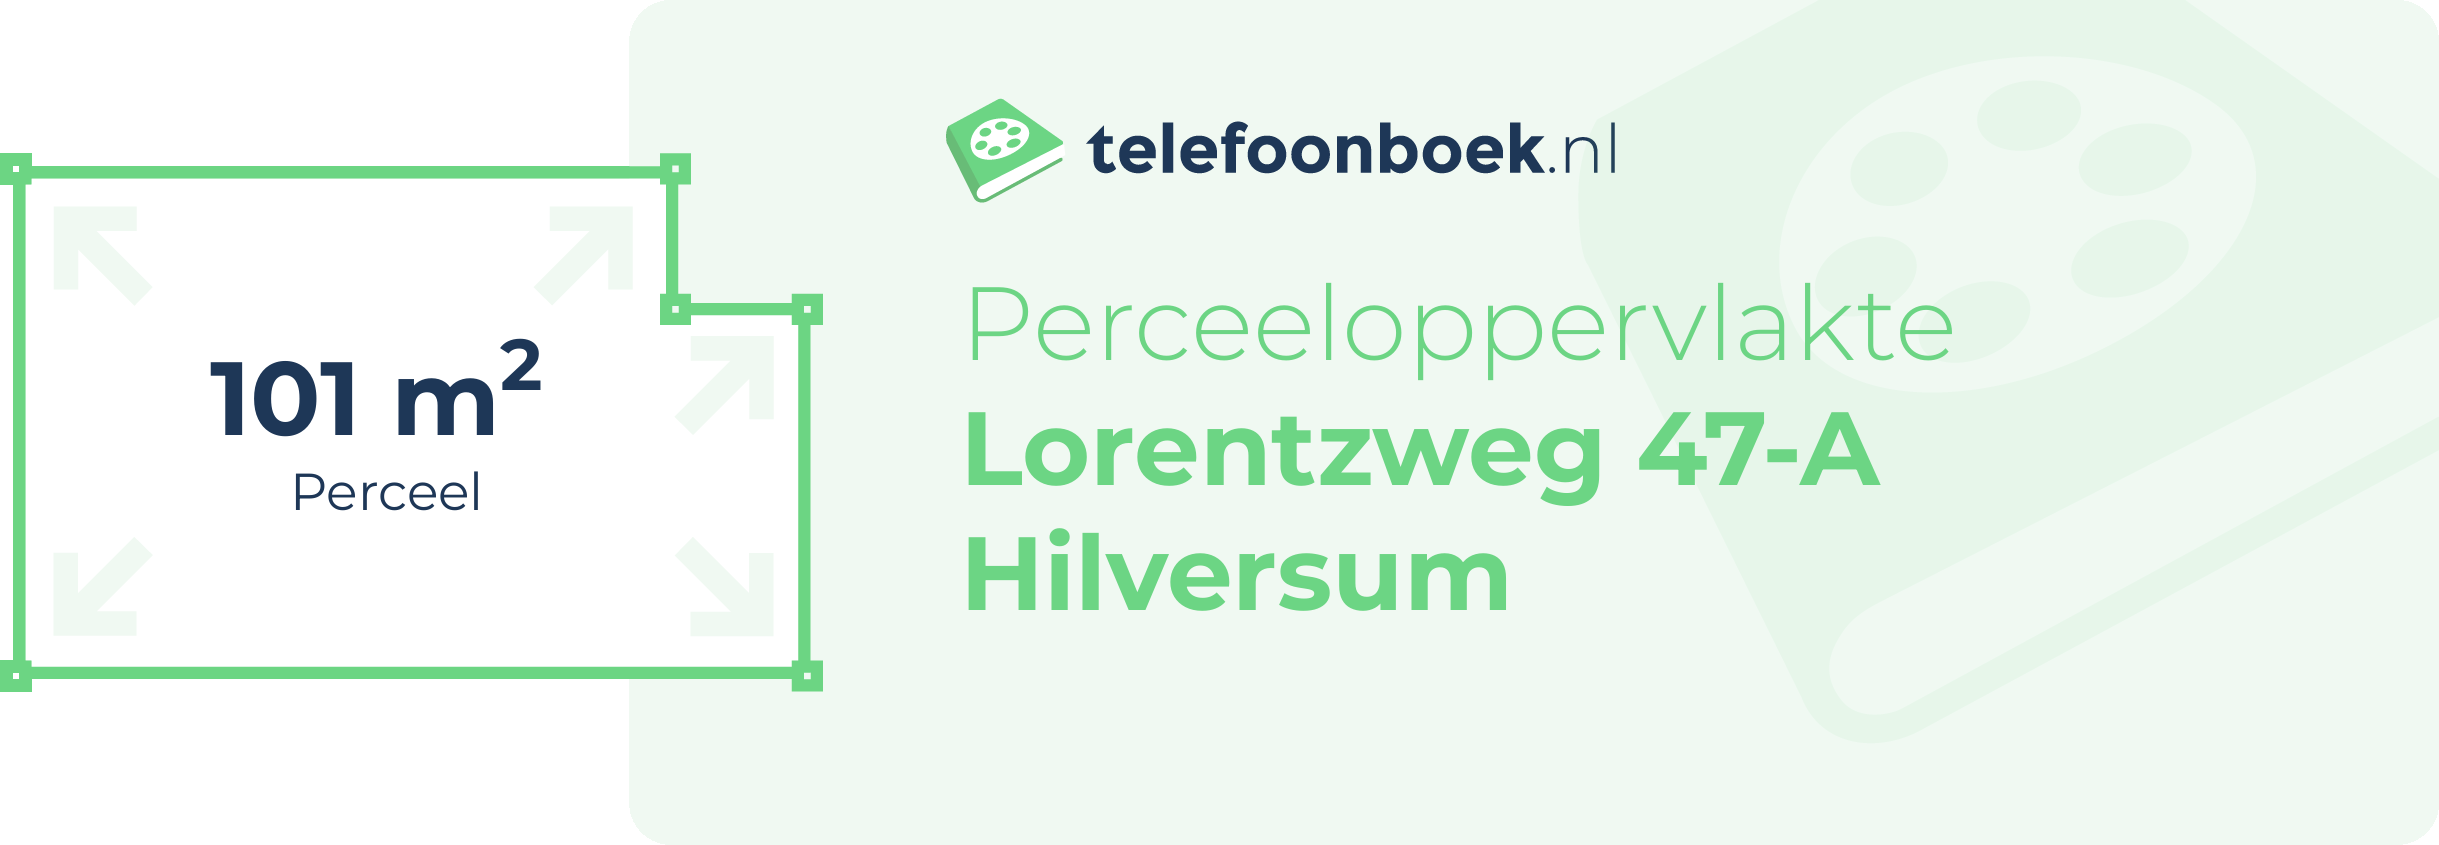 Perceeloppervlakte Lorentzweg 47-A Hilversum